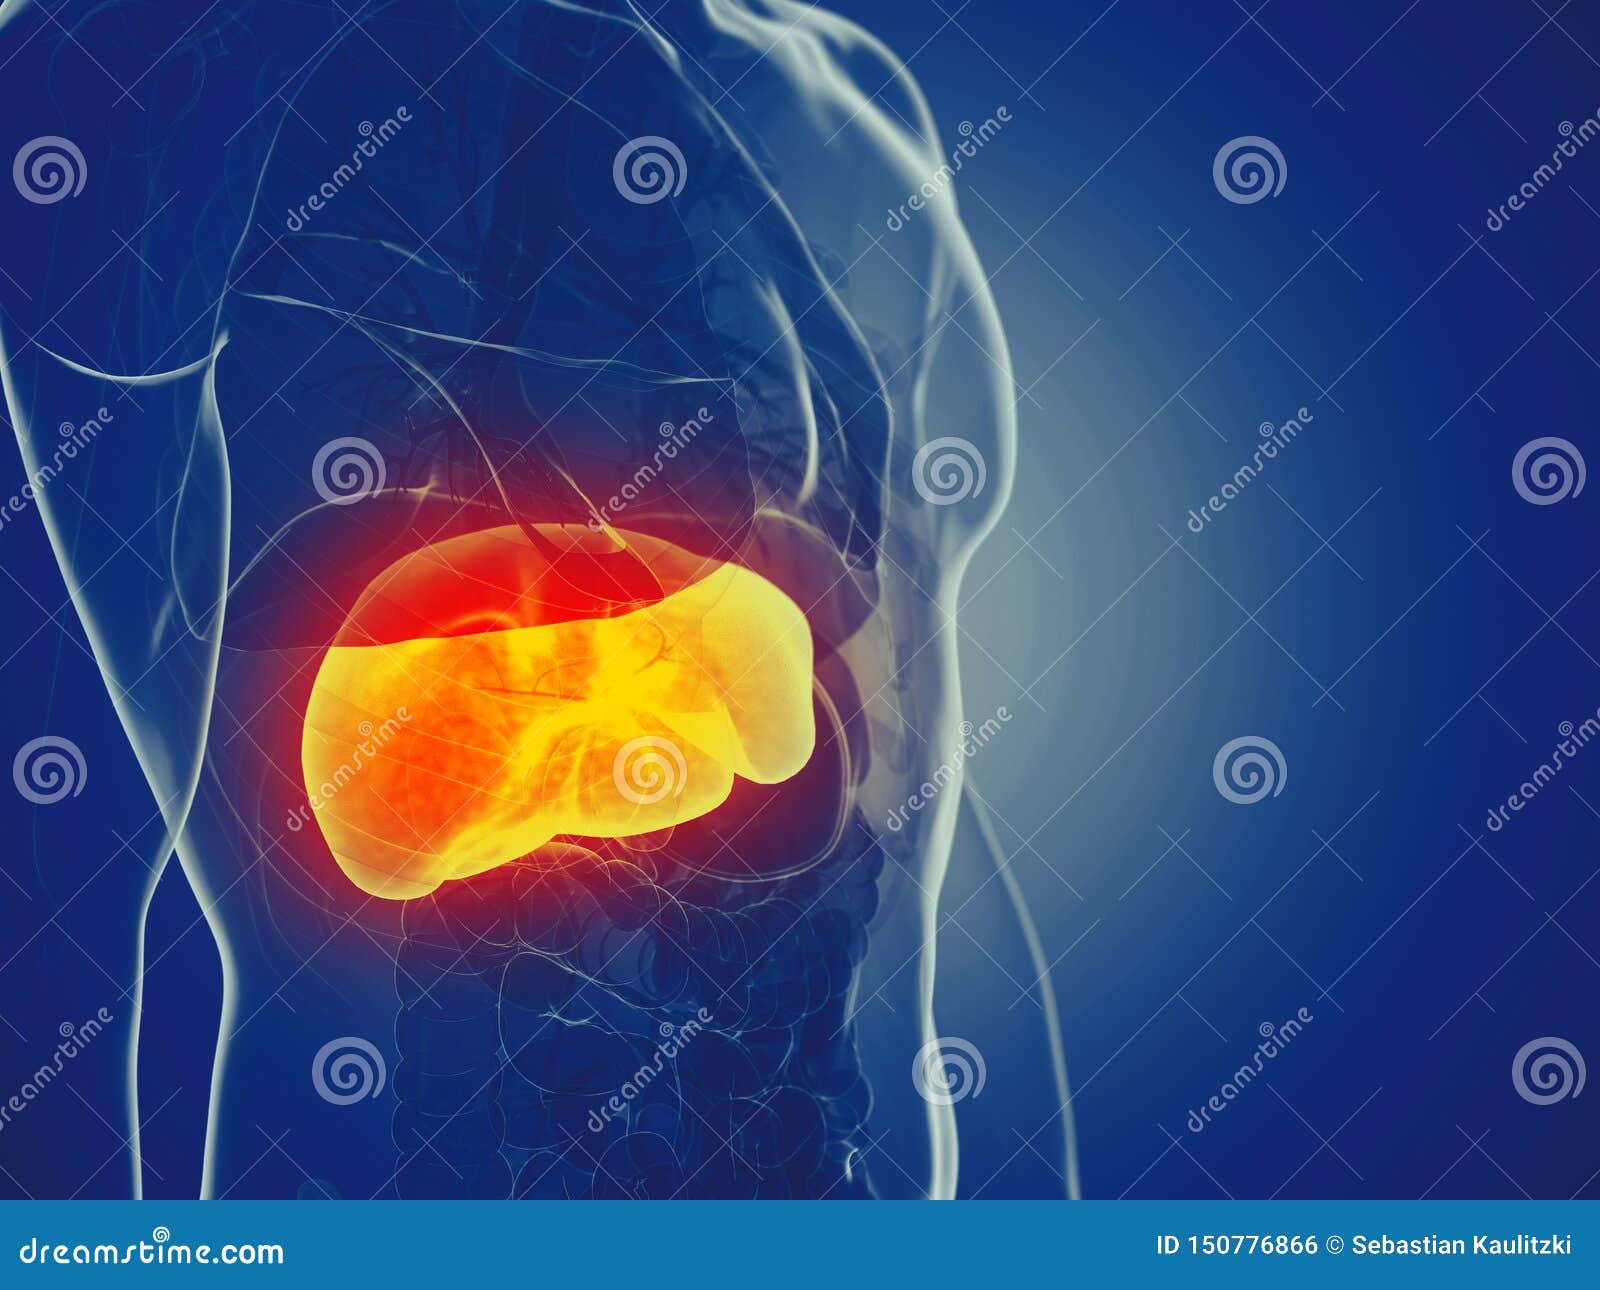 A mans liver stock illustration. Illustration of anatomy - 150776866